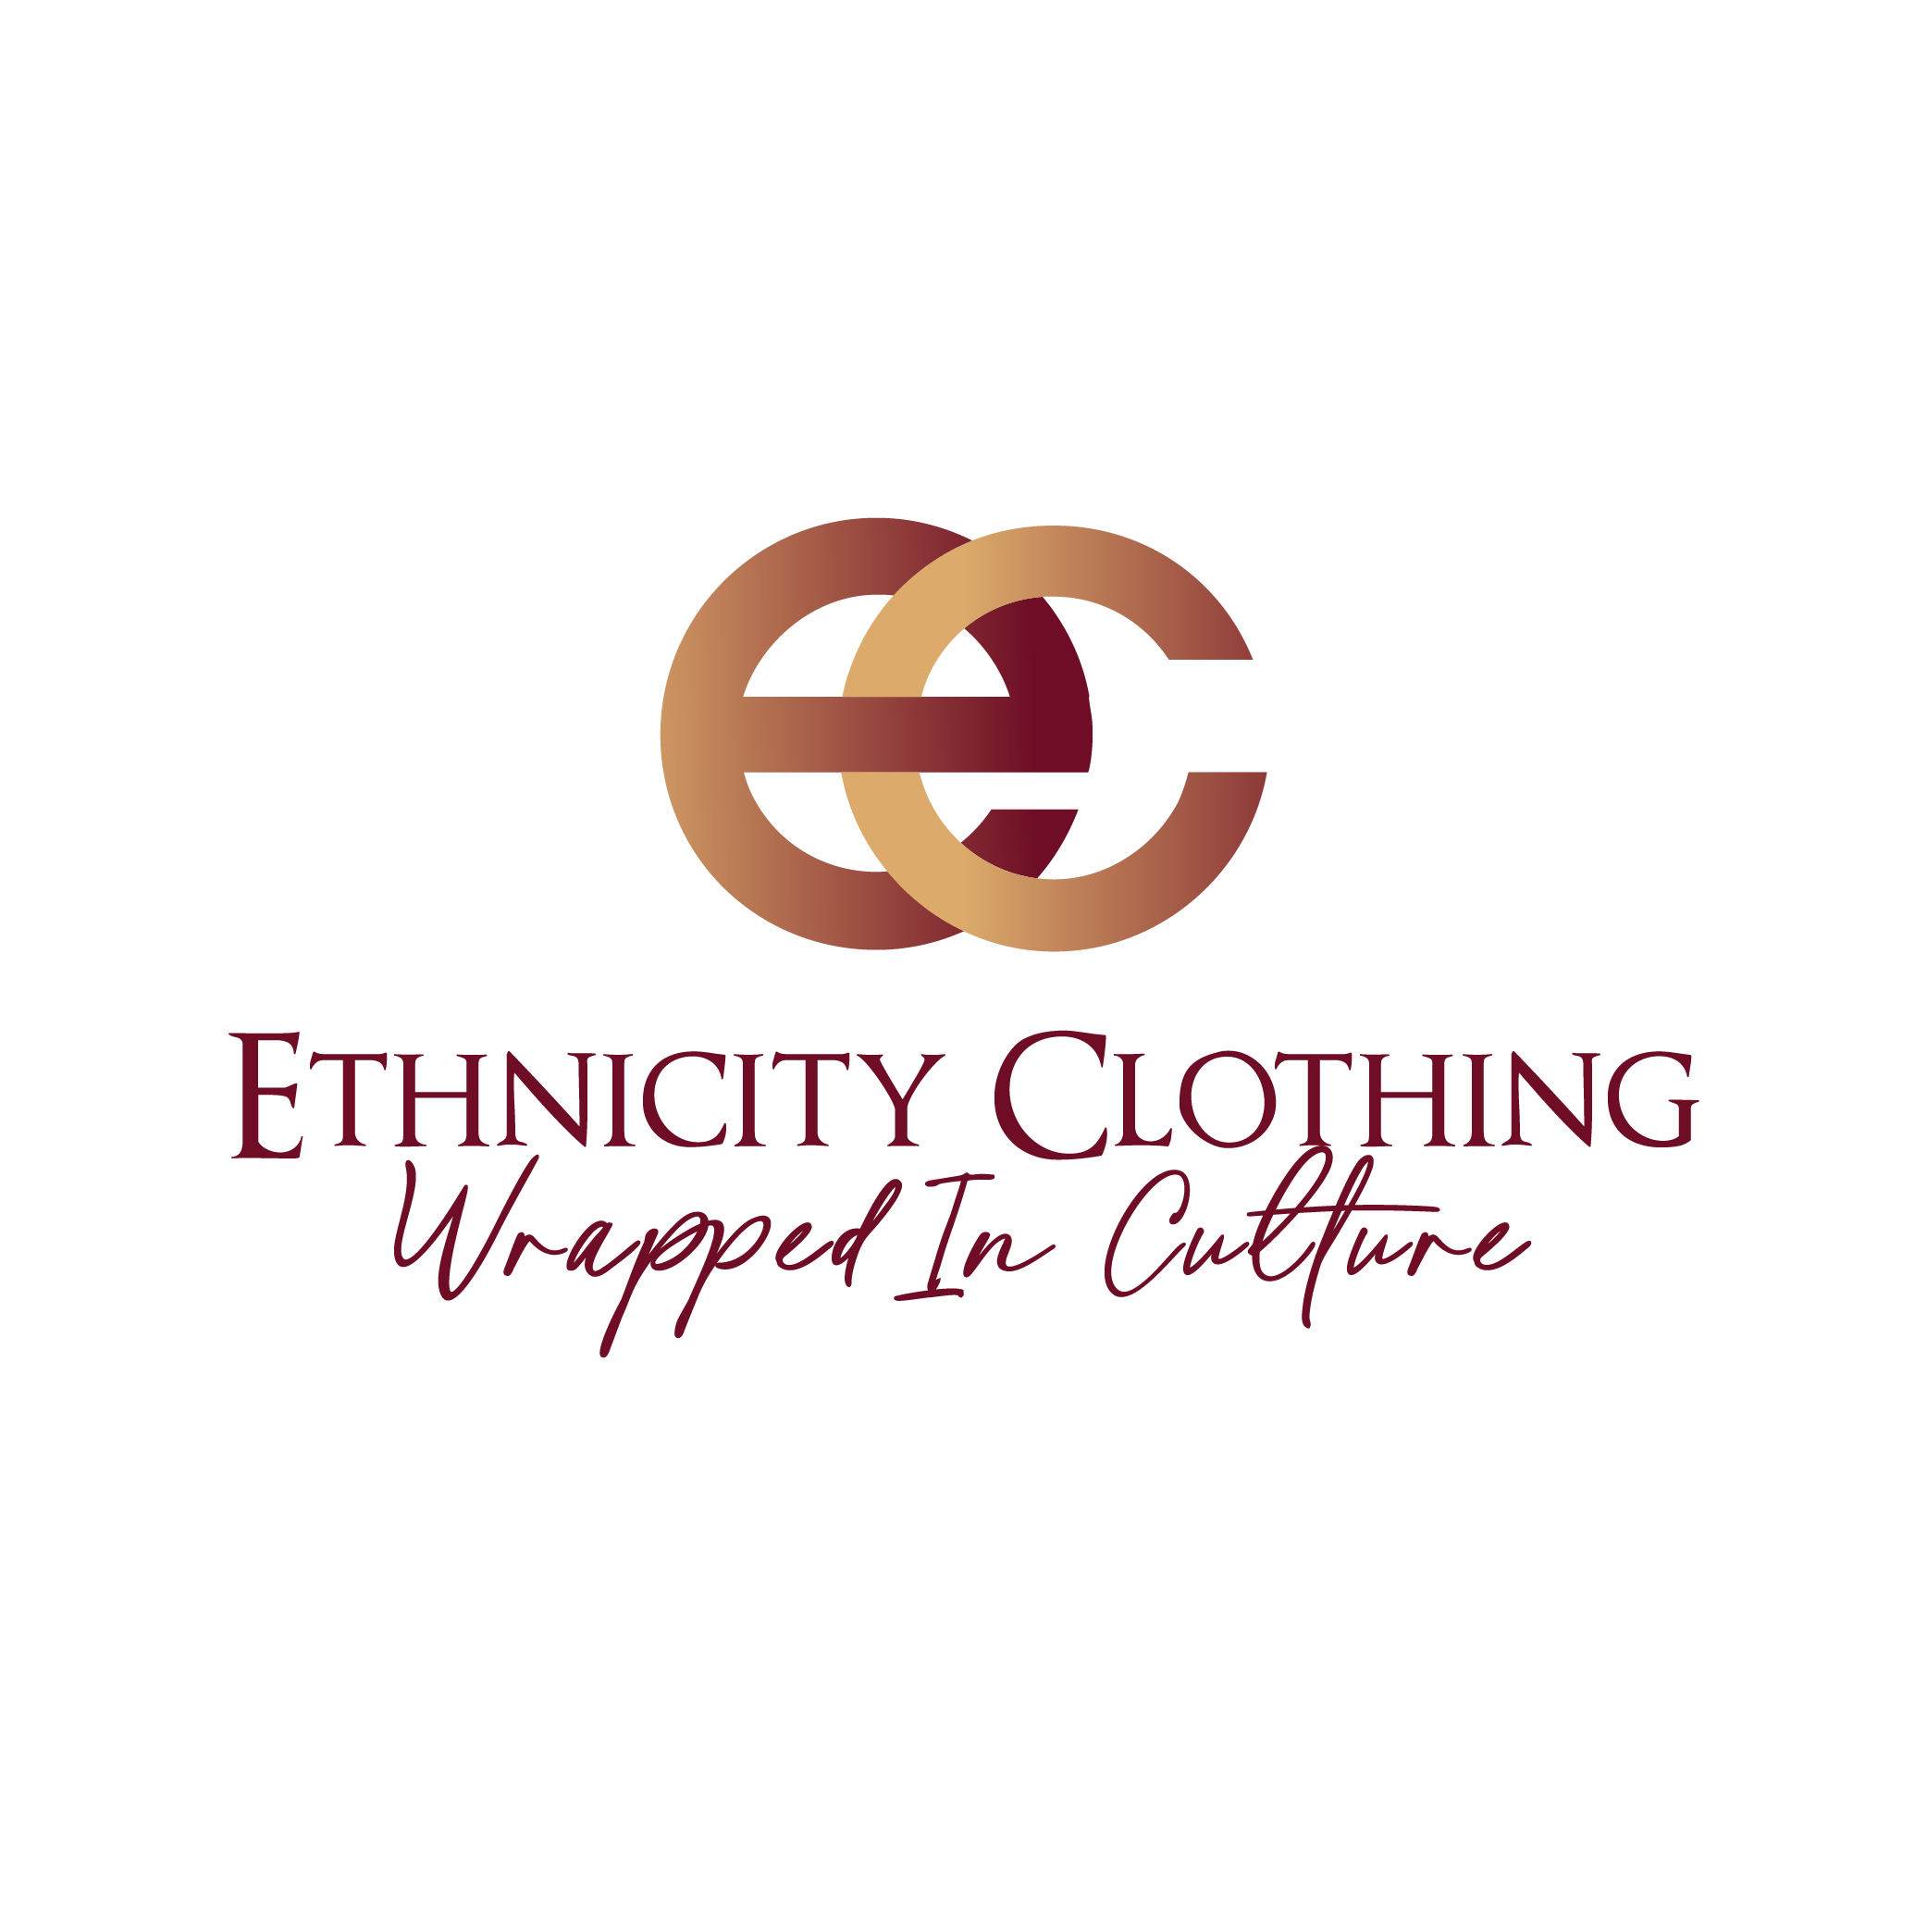 EC Logo Wine and transparent-11